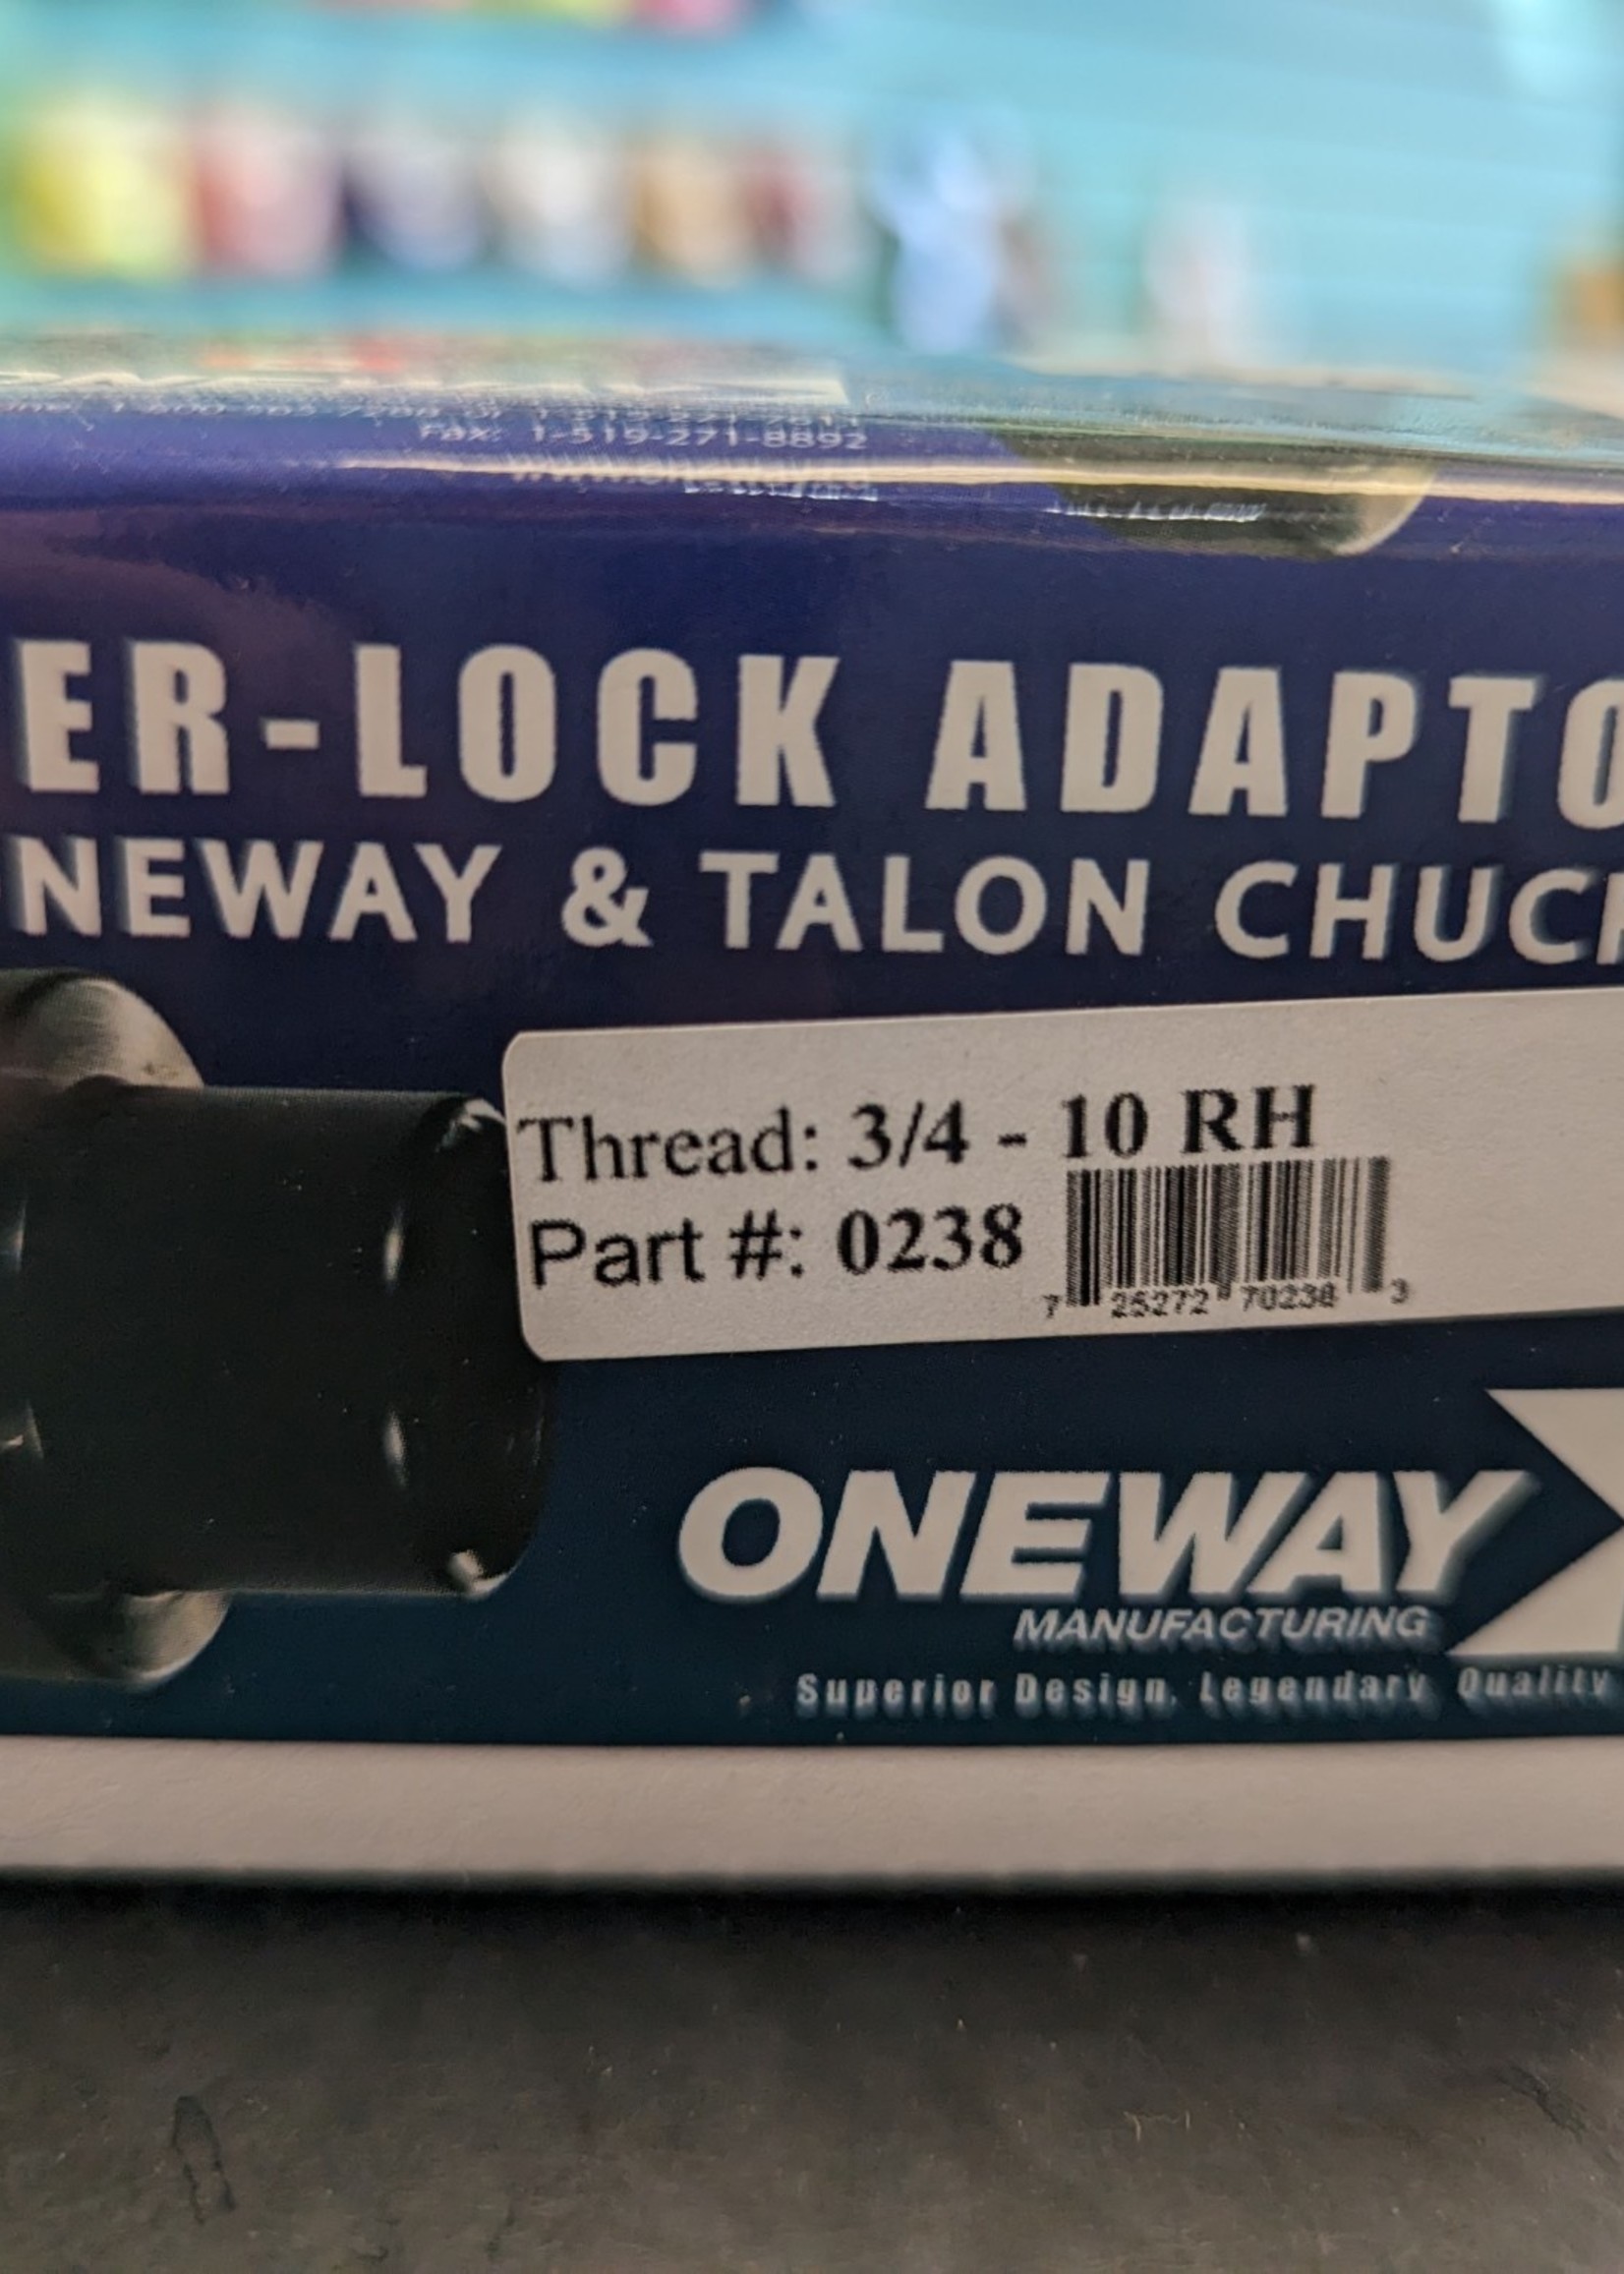 Oneway Oneway - Taper - Lock Adaptor for Oneway and Talon Chucks Thread 3/4 - 10 RH-p#0238